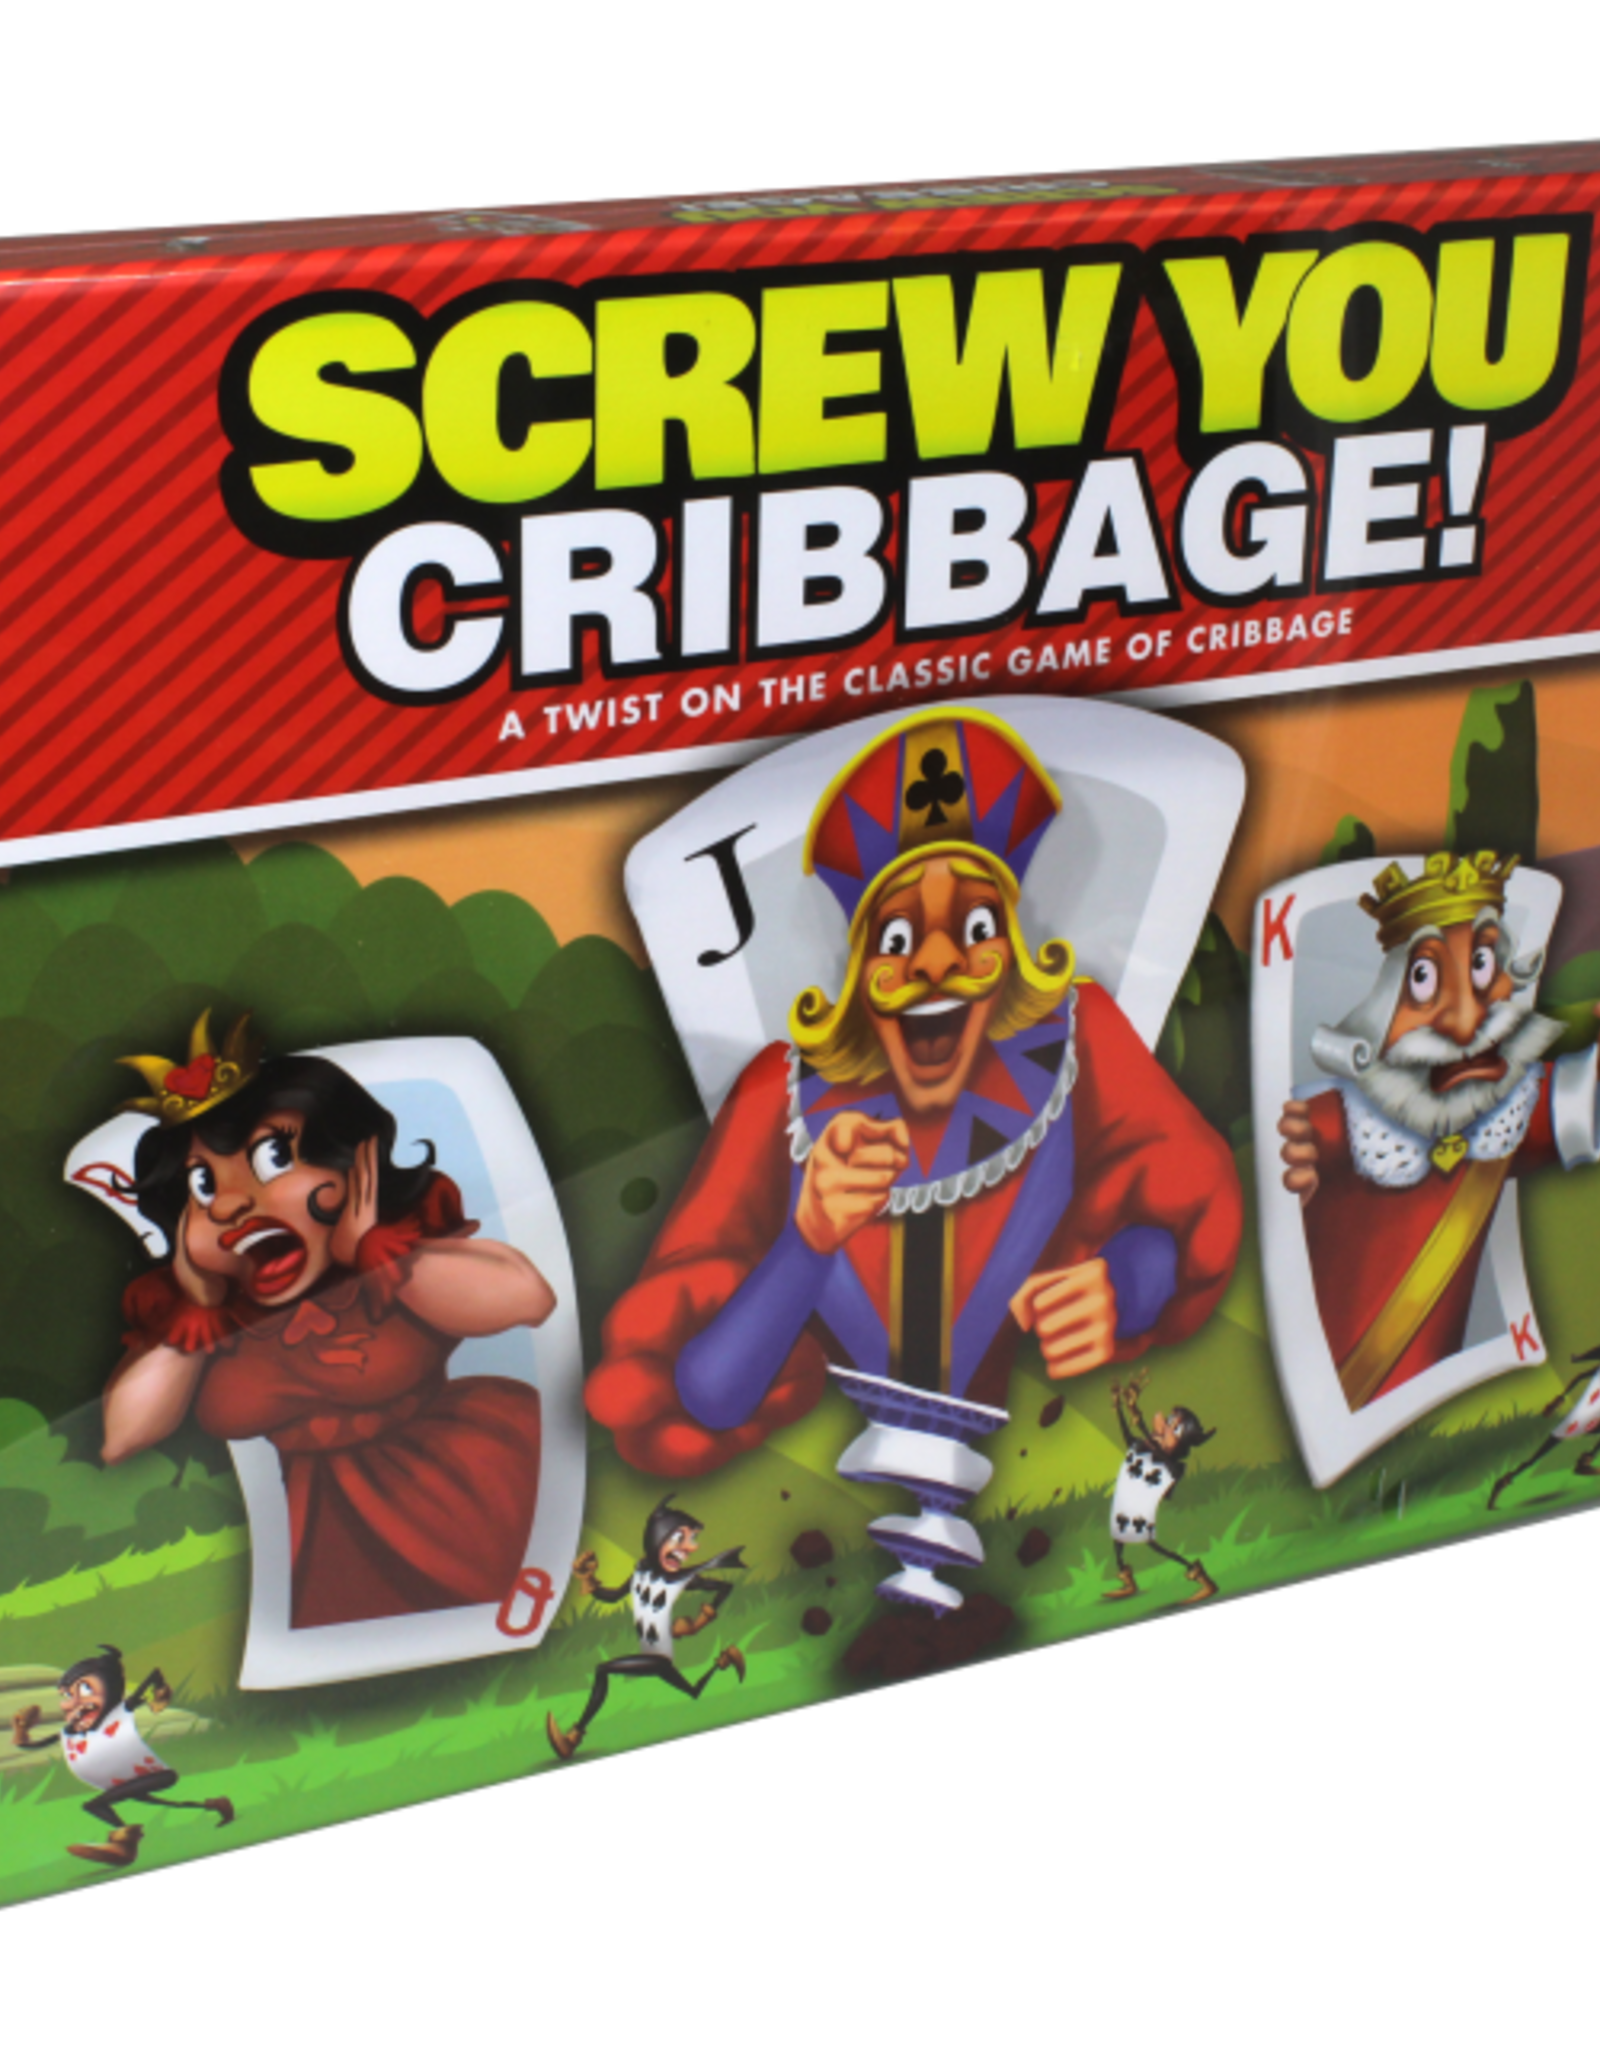 Screw you Cribbage Screw You Cribbage!